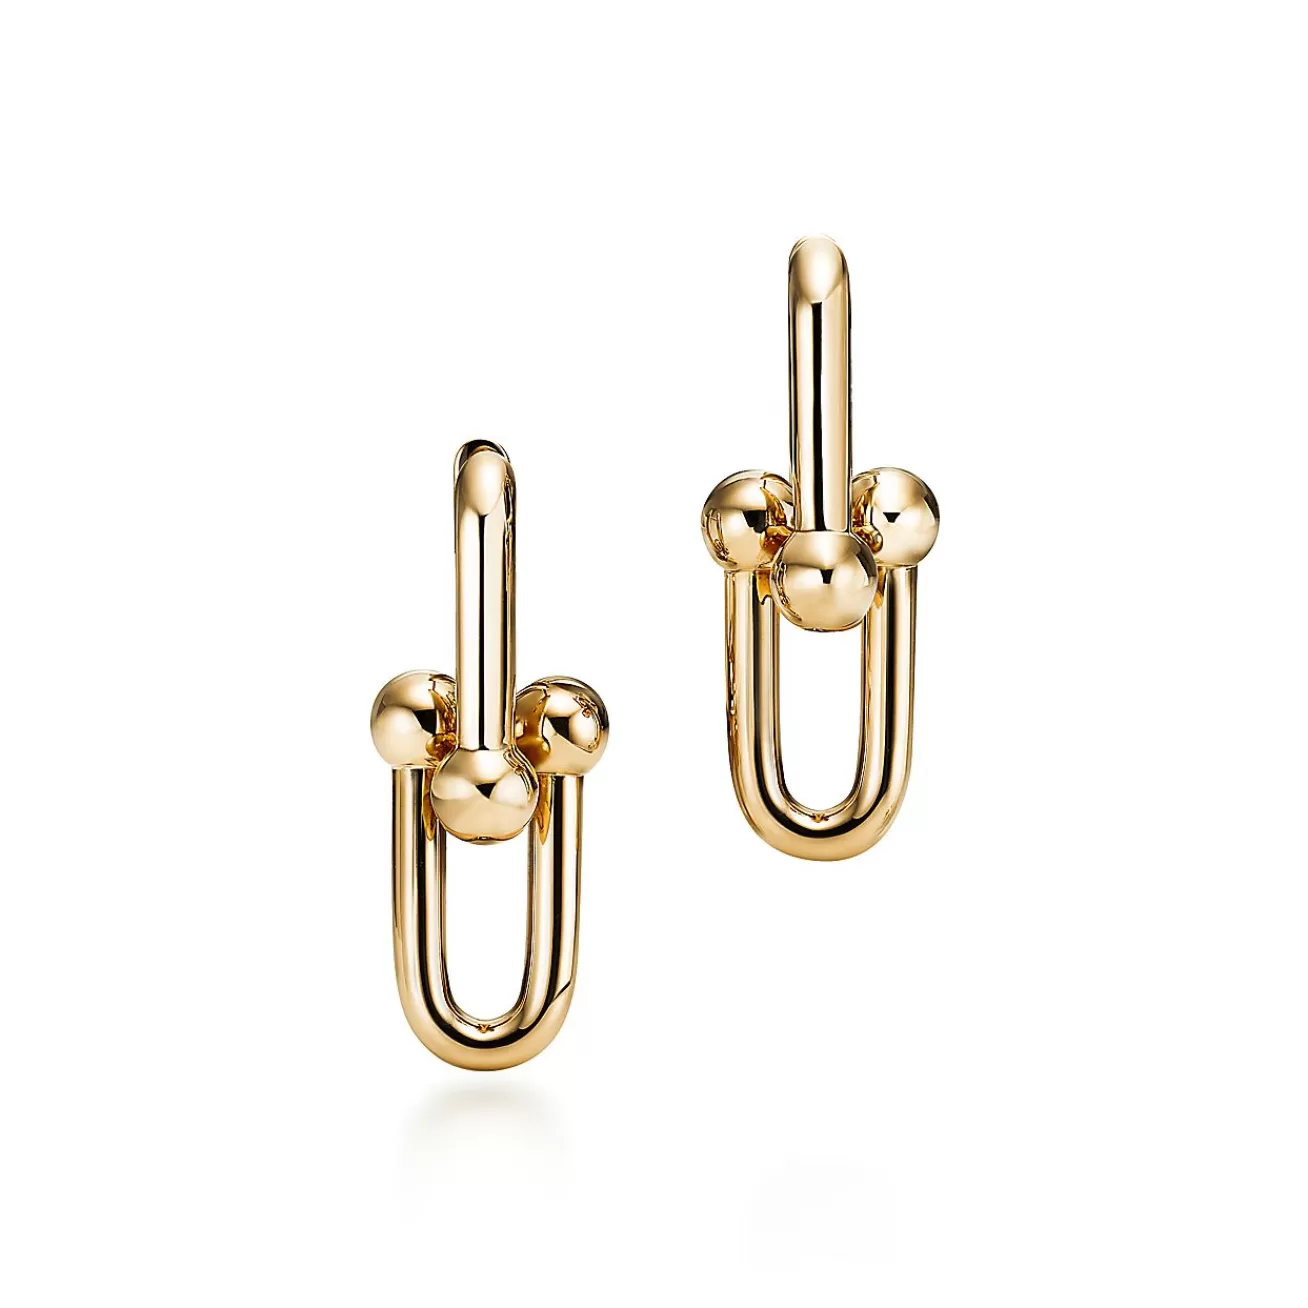 Tiffany & Co. Tiffany HardWear Large Link Earrings in Yellow Gold | ^ Earrings | Gifts for Her